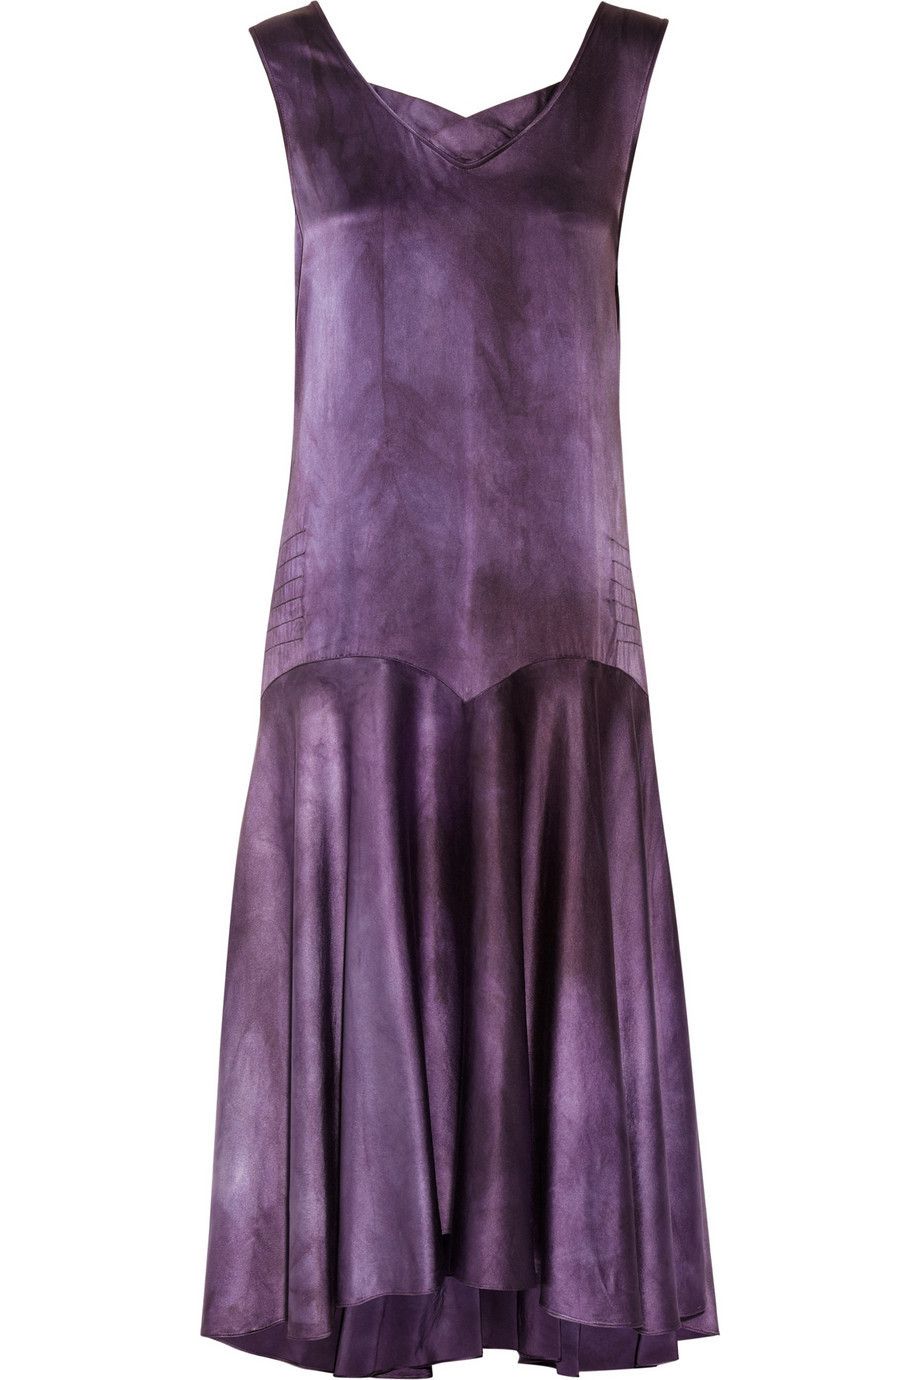 Purple, Textile, Dress, One-piece garment, Magenta, Violet, Lavender, Pattern, Fashion, Day dress, 